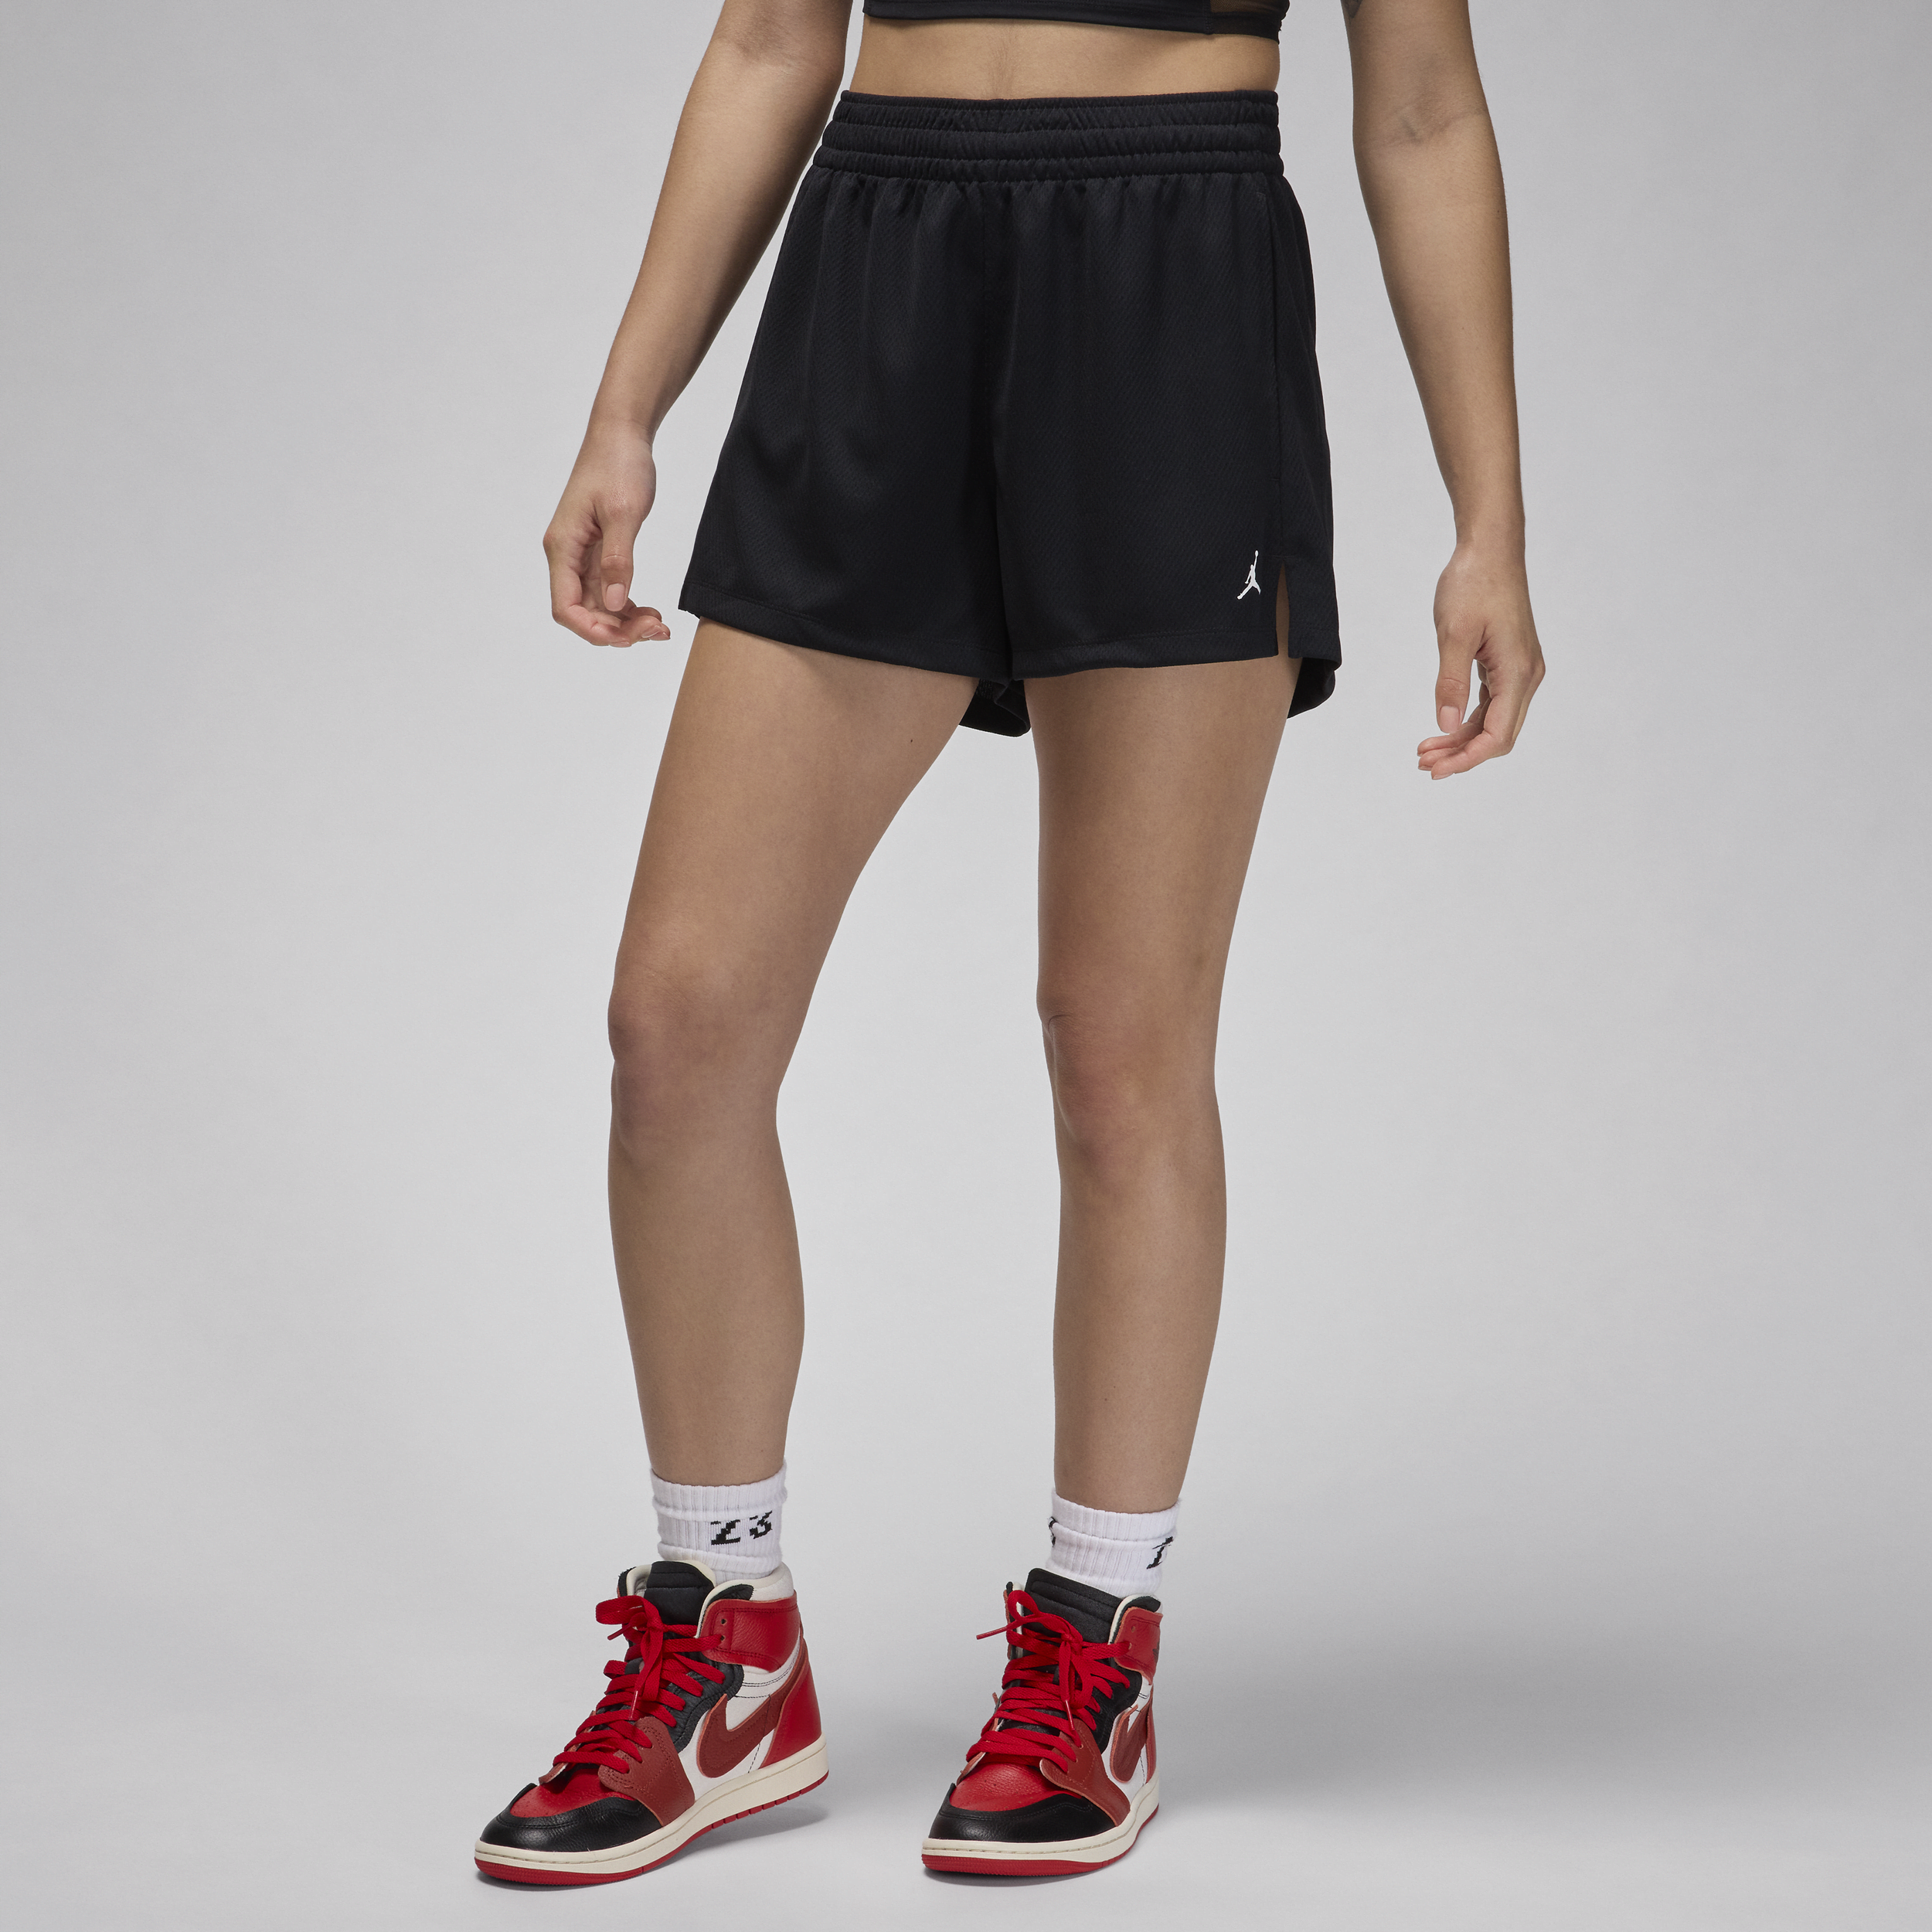 Jordan Sport Pantalón corto de malla - Mujer - Negro